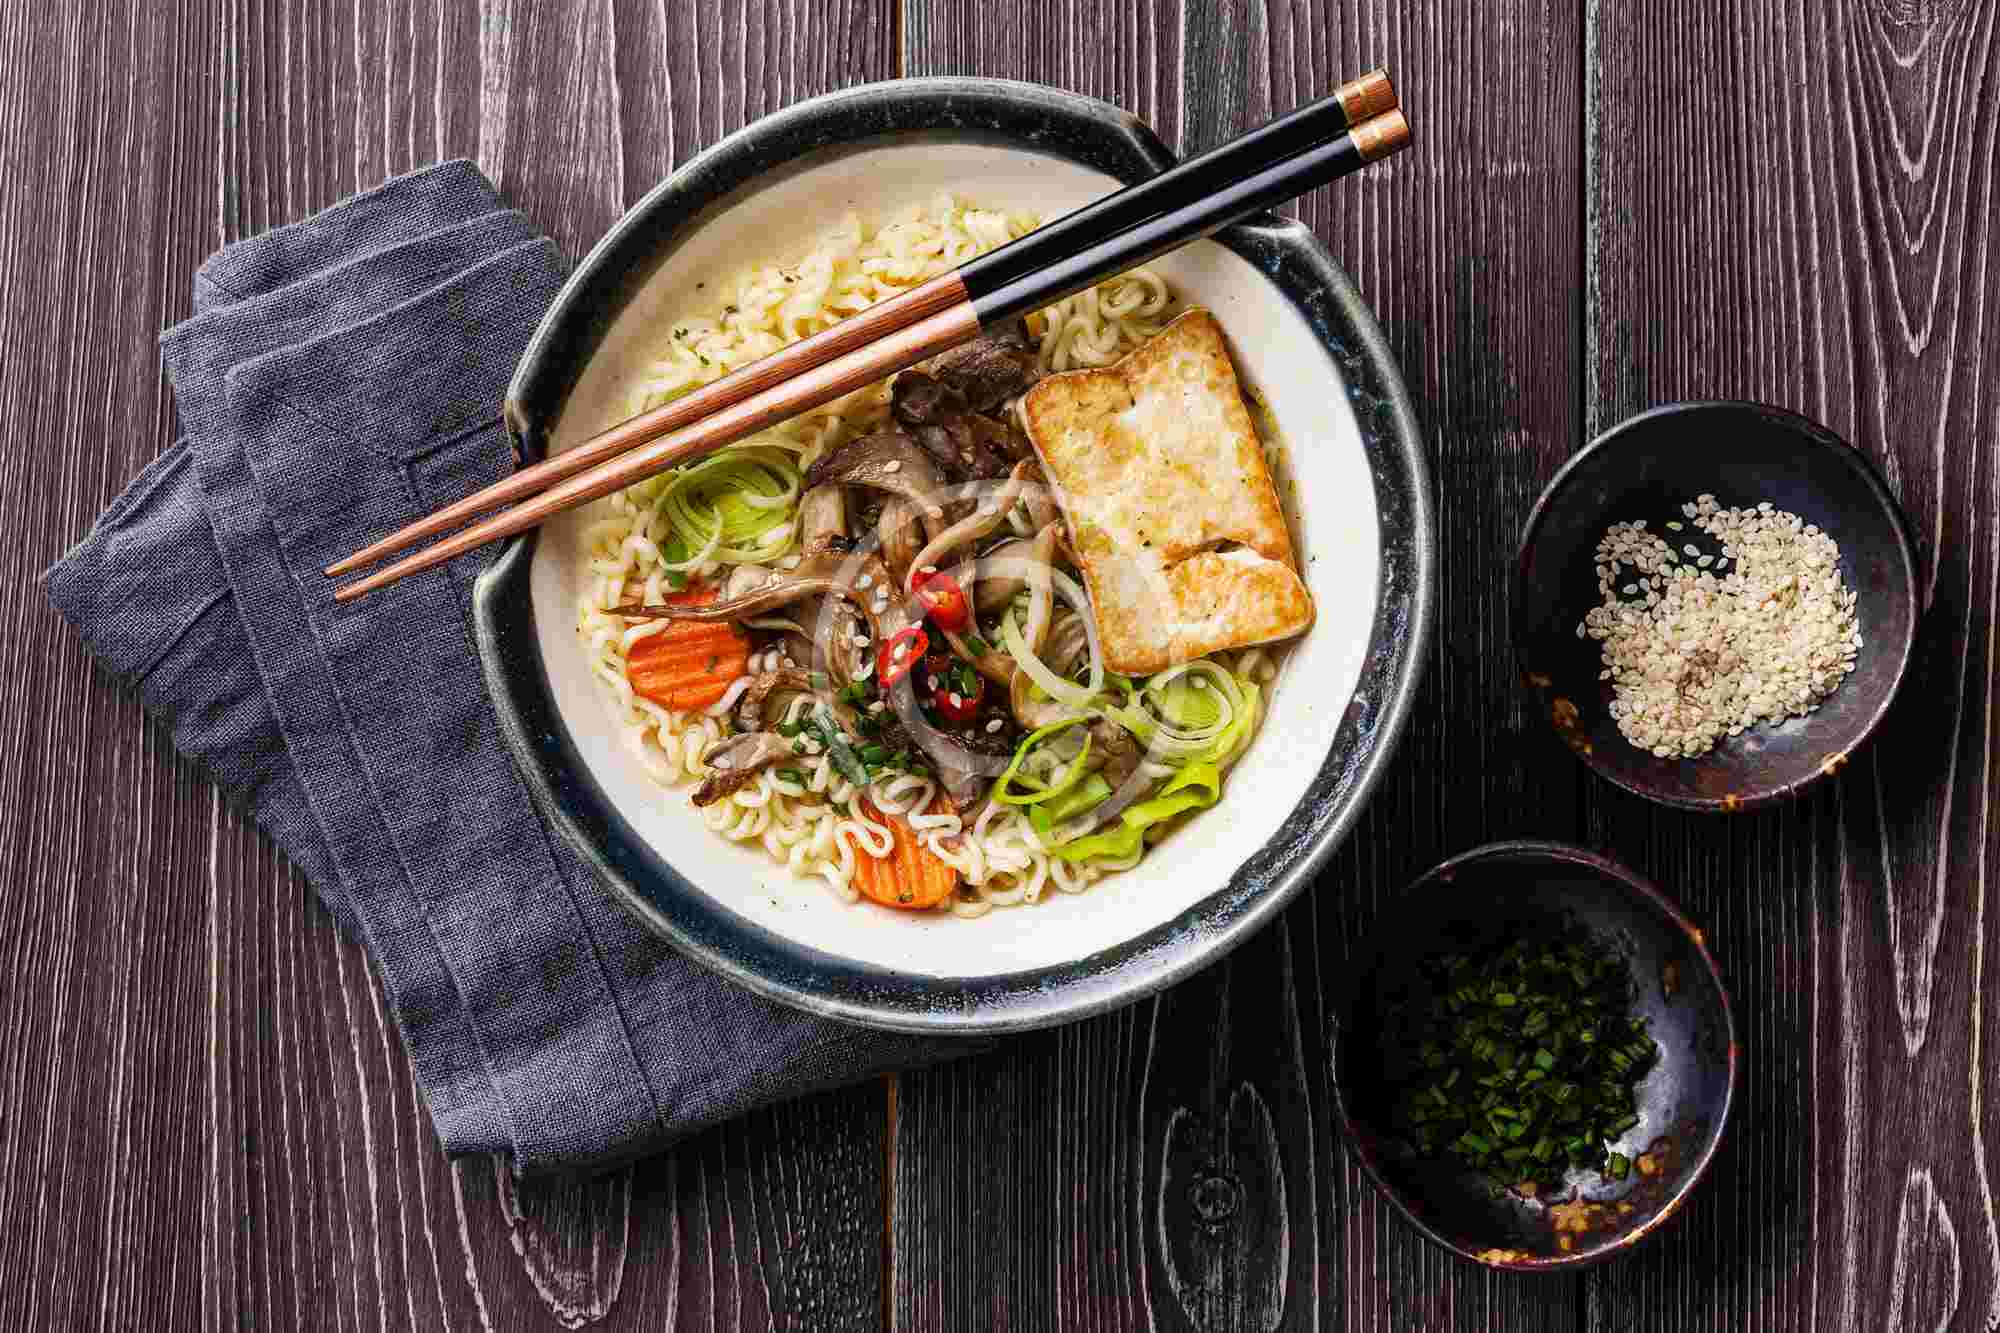 Saving Chinatown by Authentic Korean Food – YAKITATE